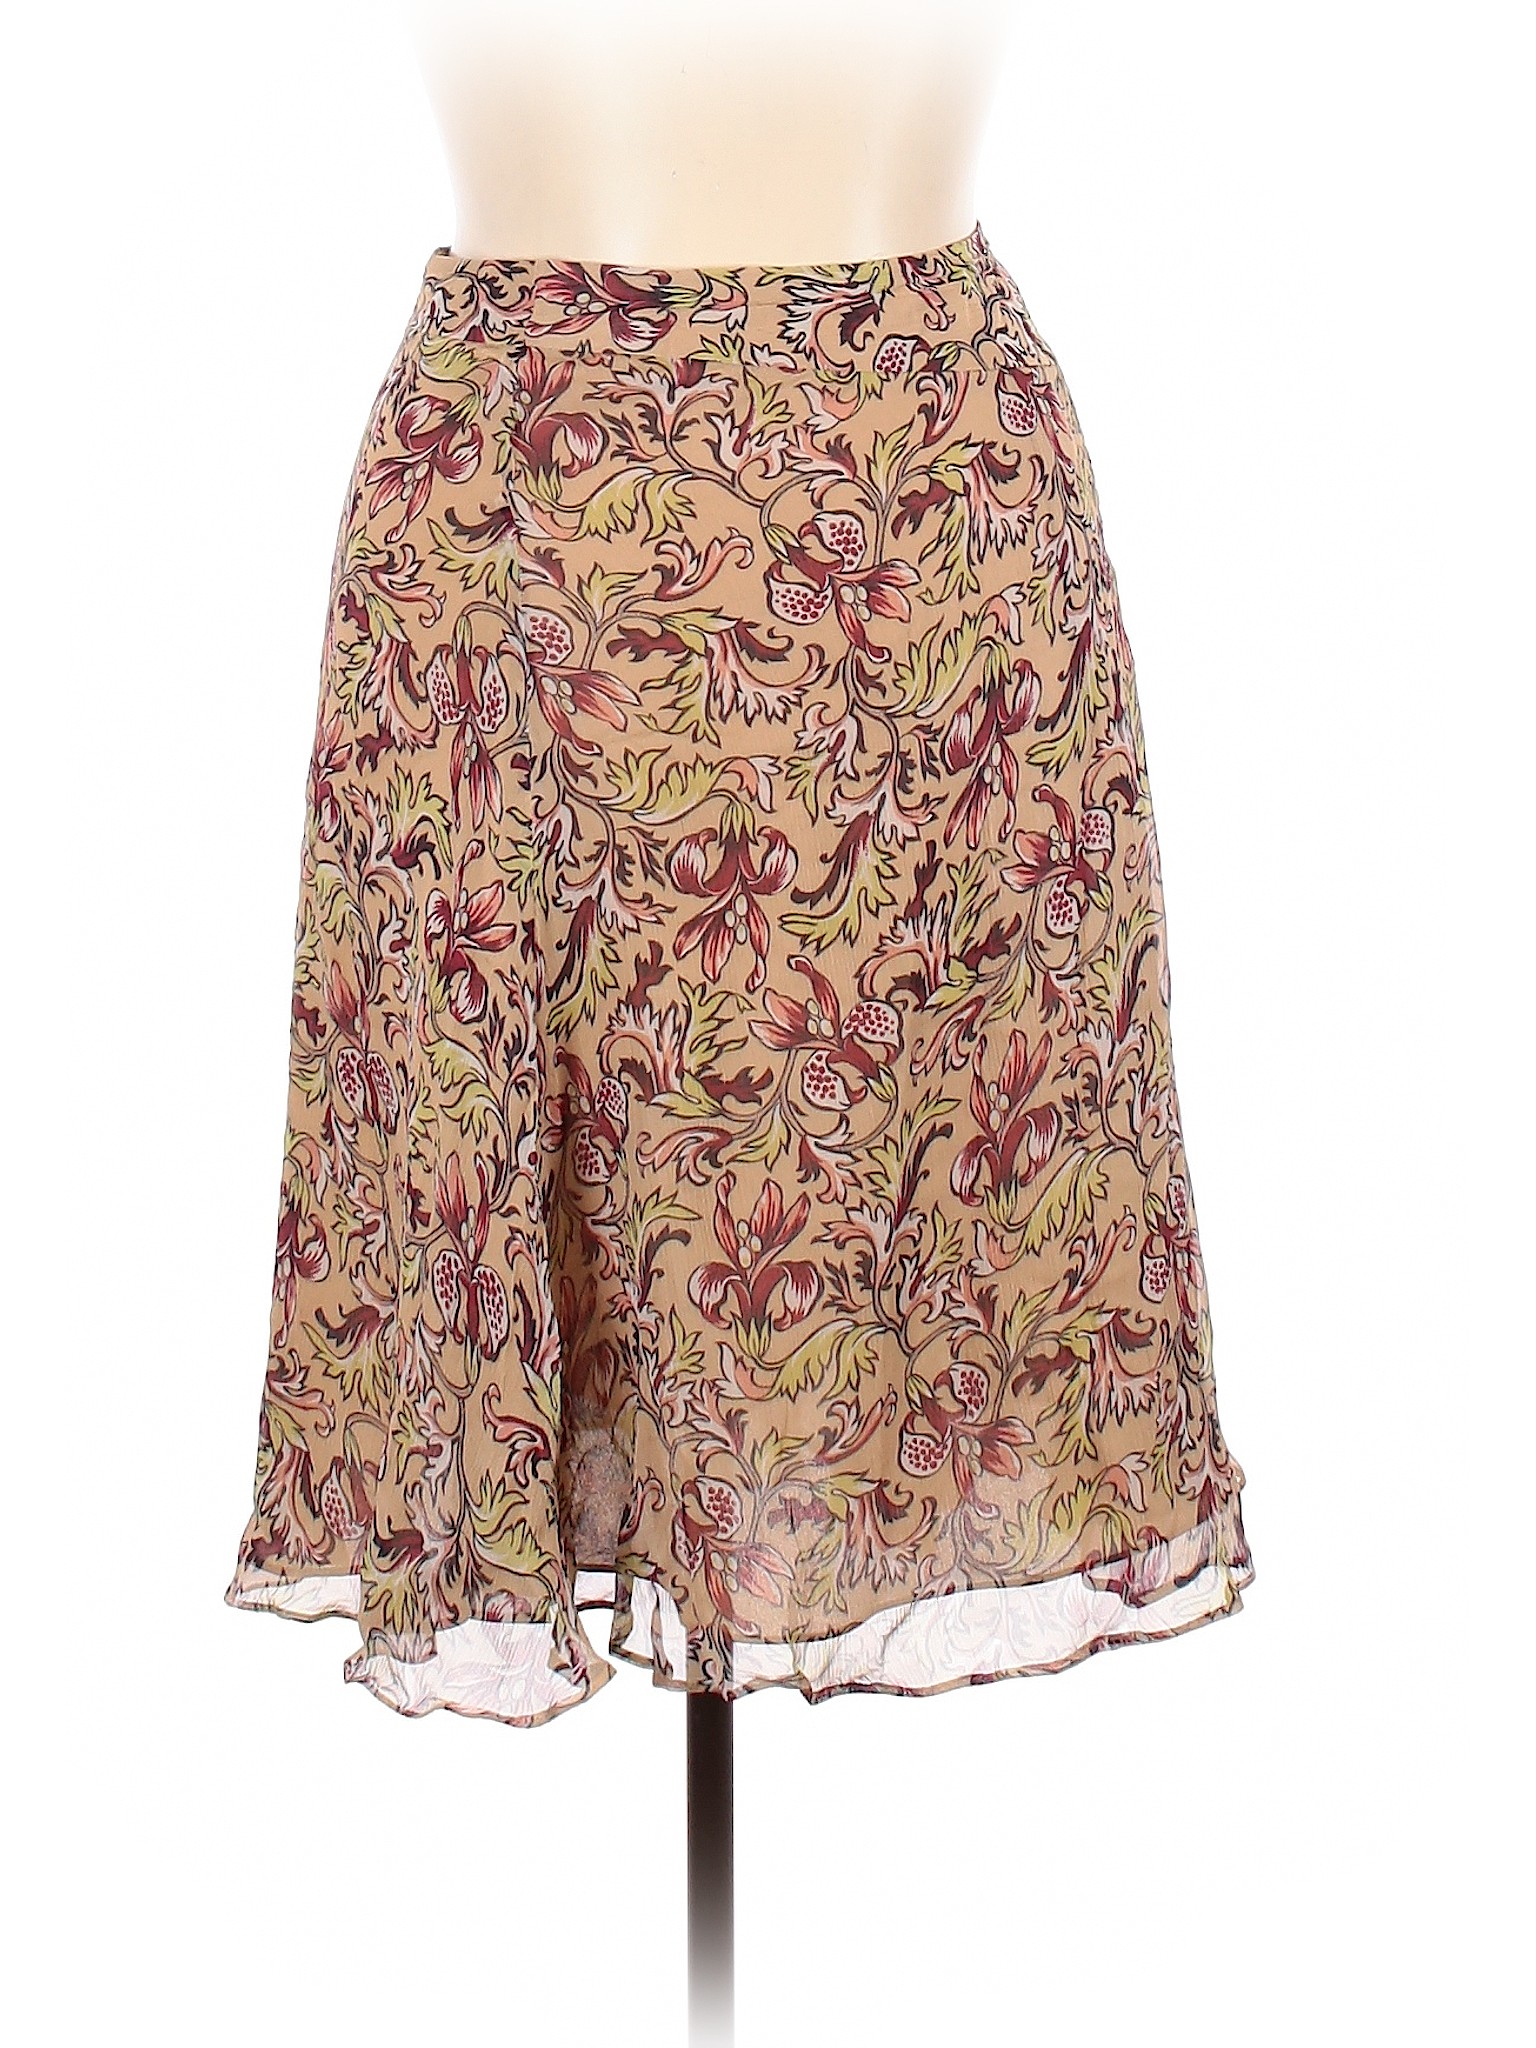 Nicole by Nicole Miller Women Brown Silk Skirt 10 | eBay